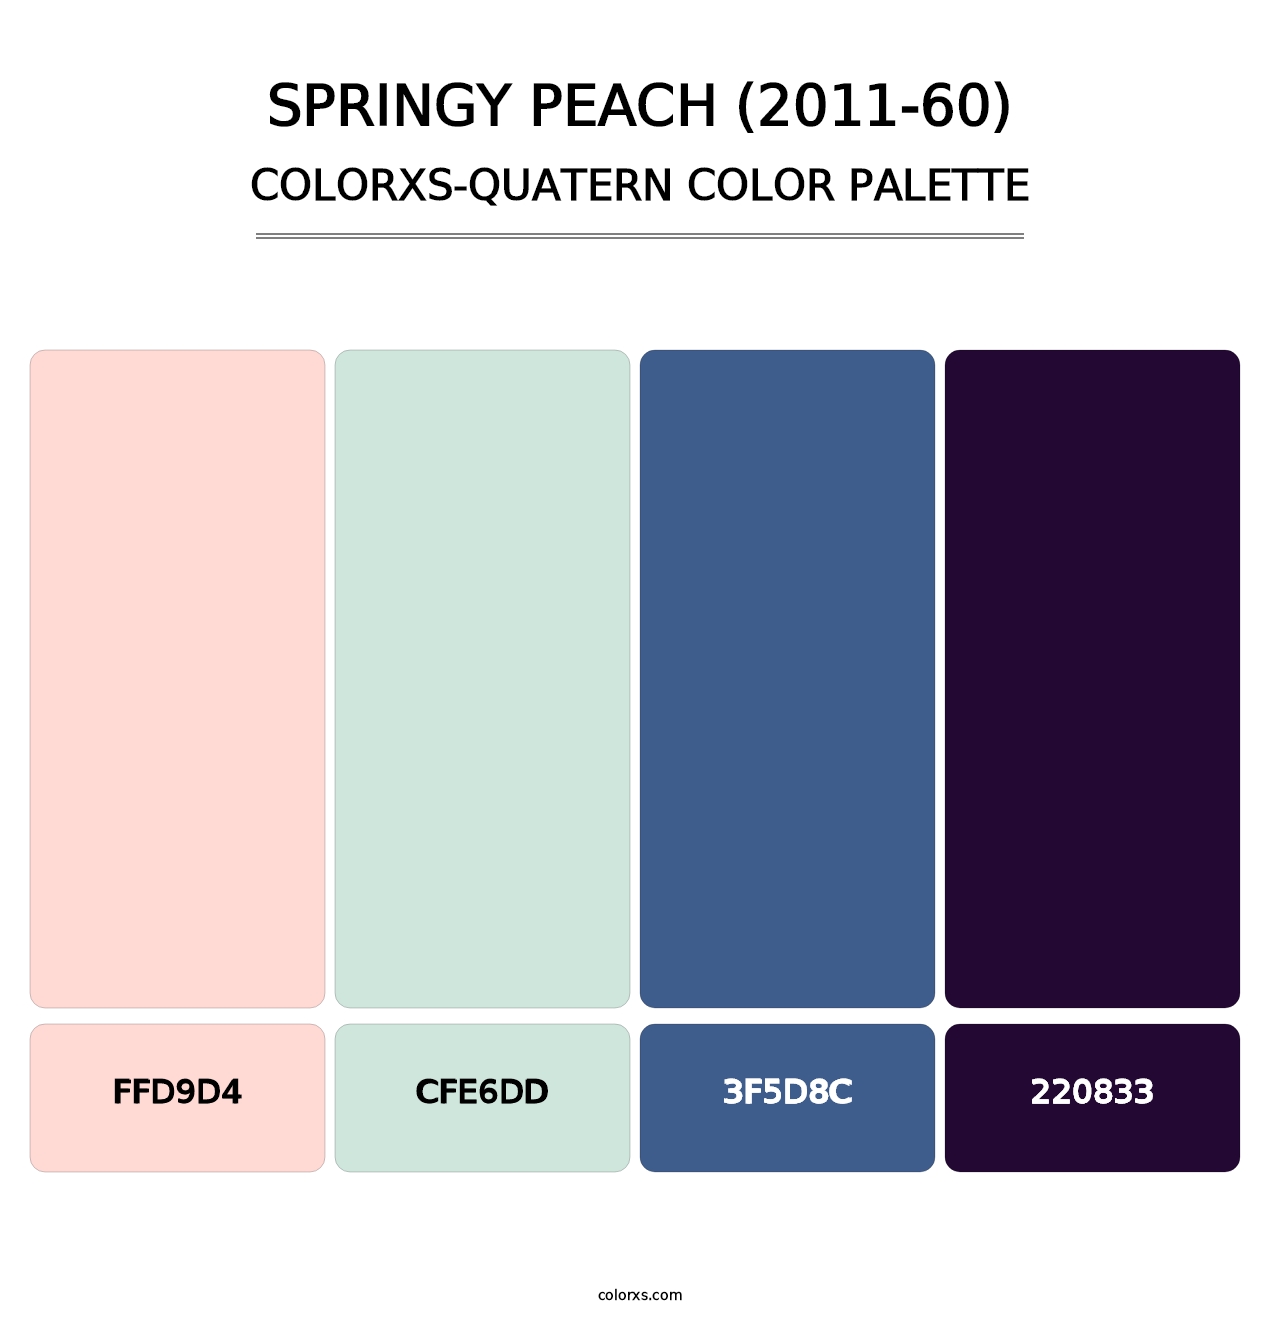 Springy Peach (2011-60) - Colorxs Quatern Palette